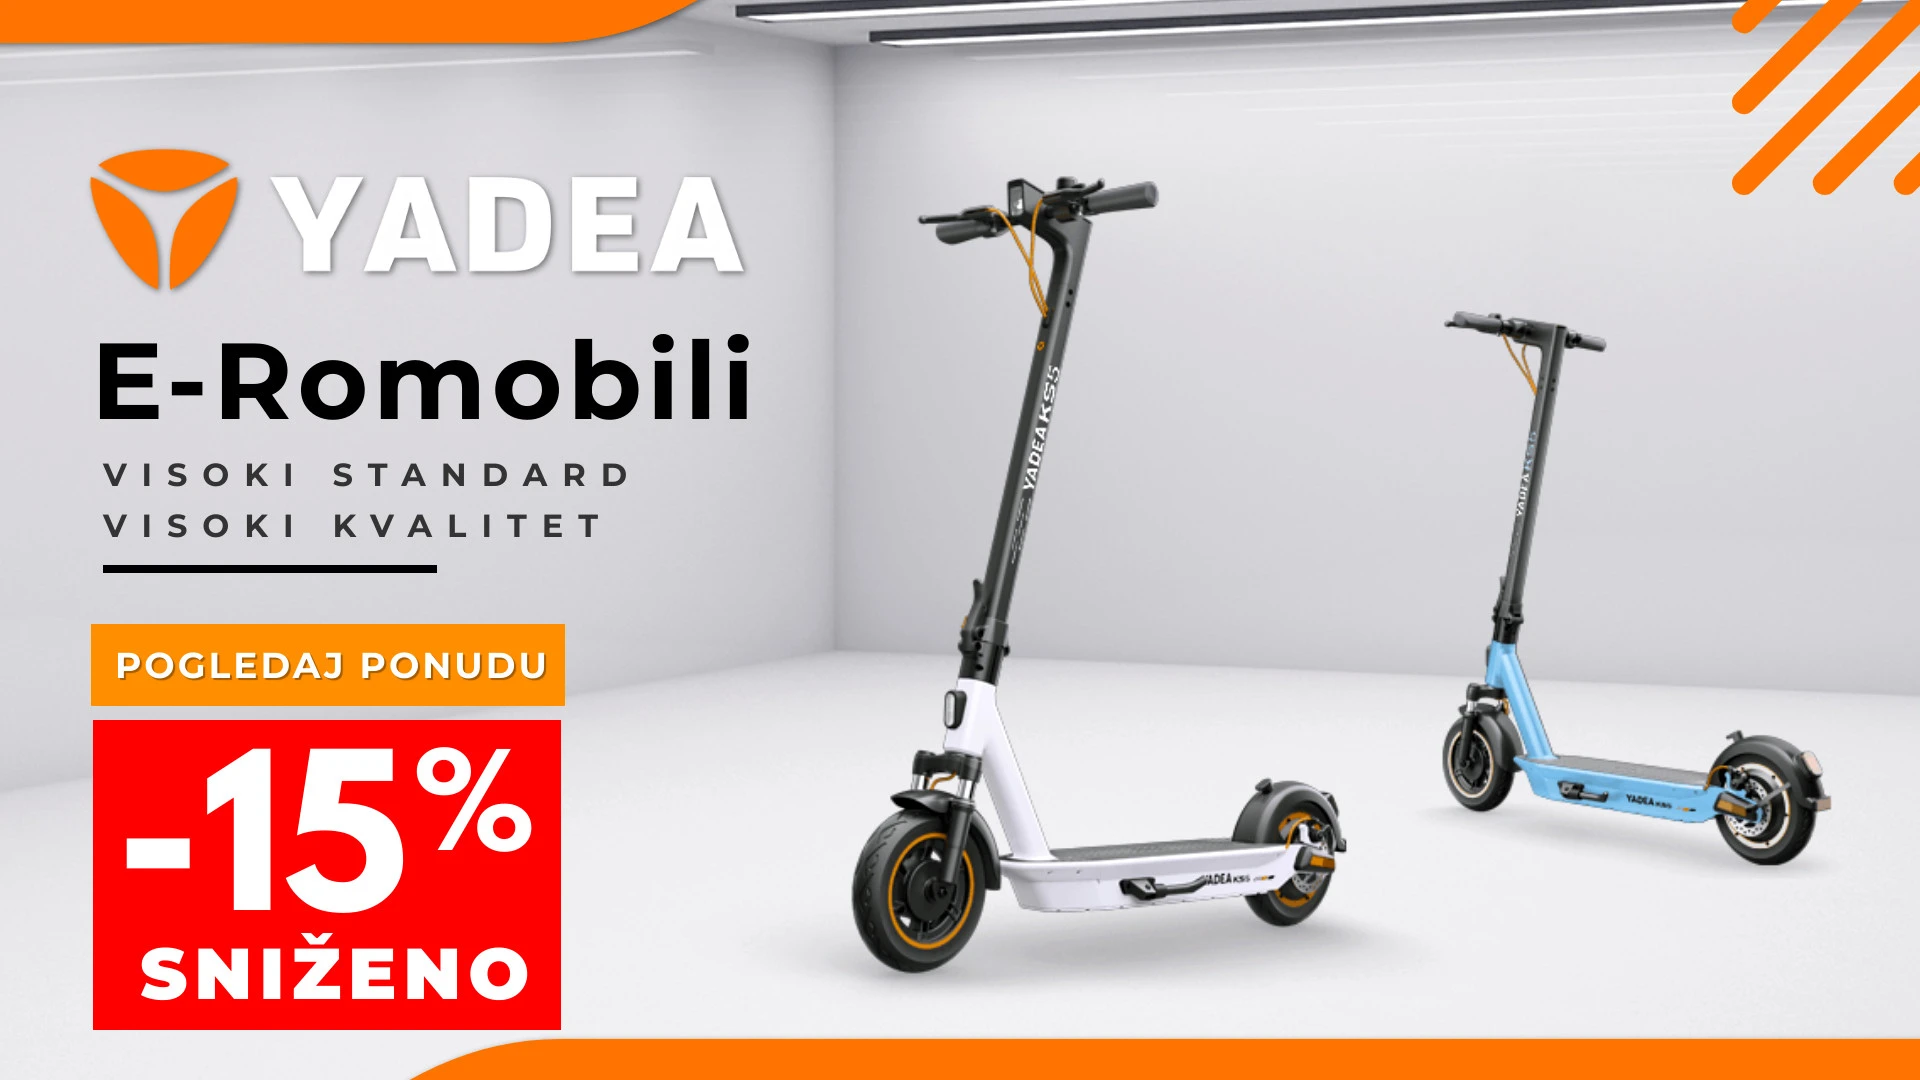 Yadea e-romobili BiH M-Bike Shop